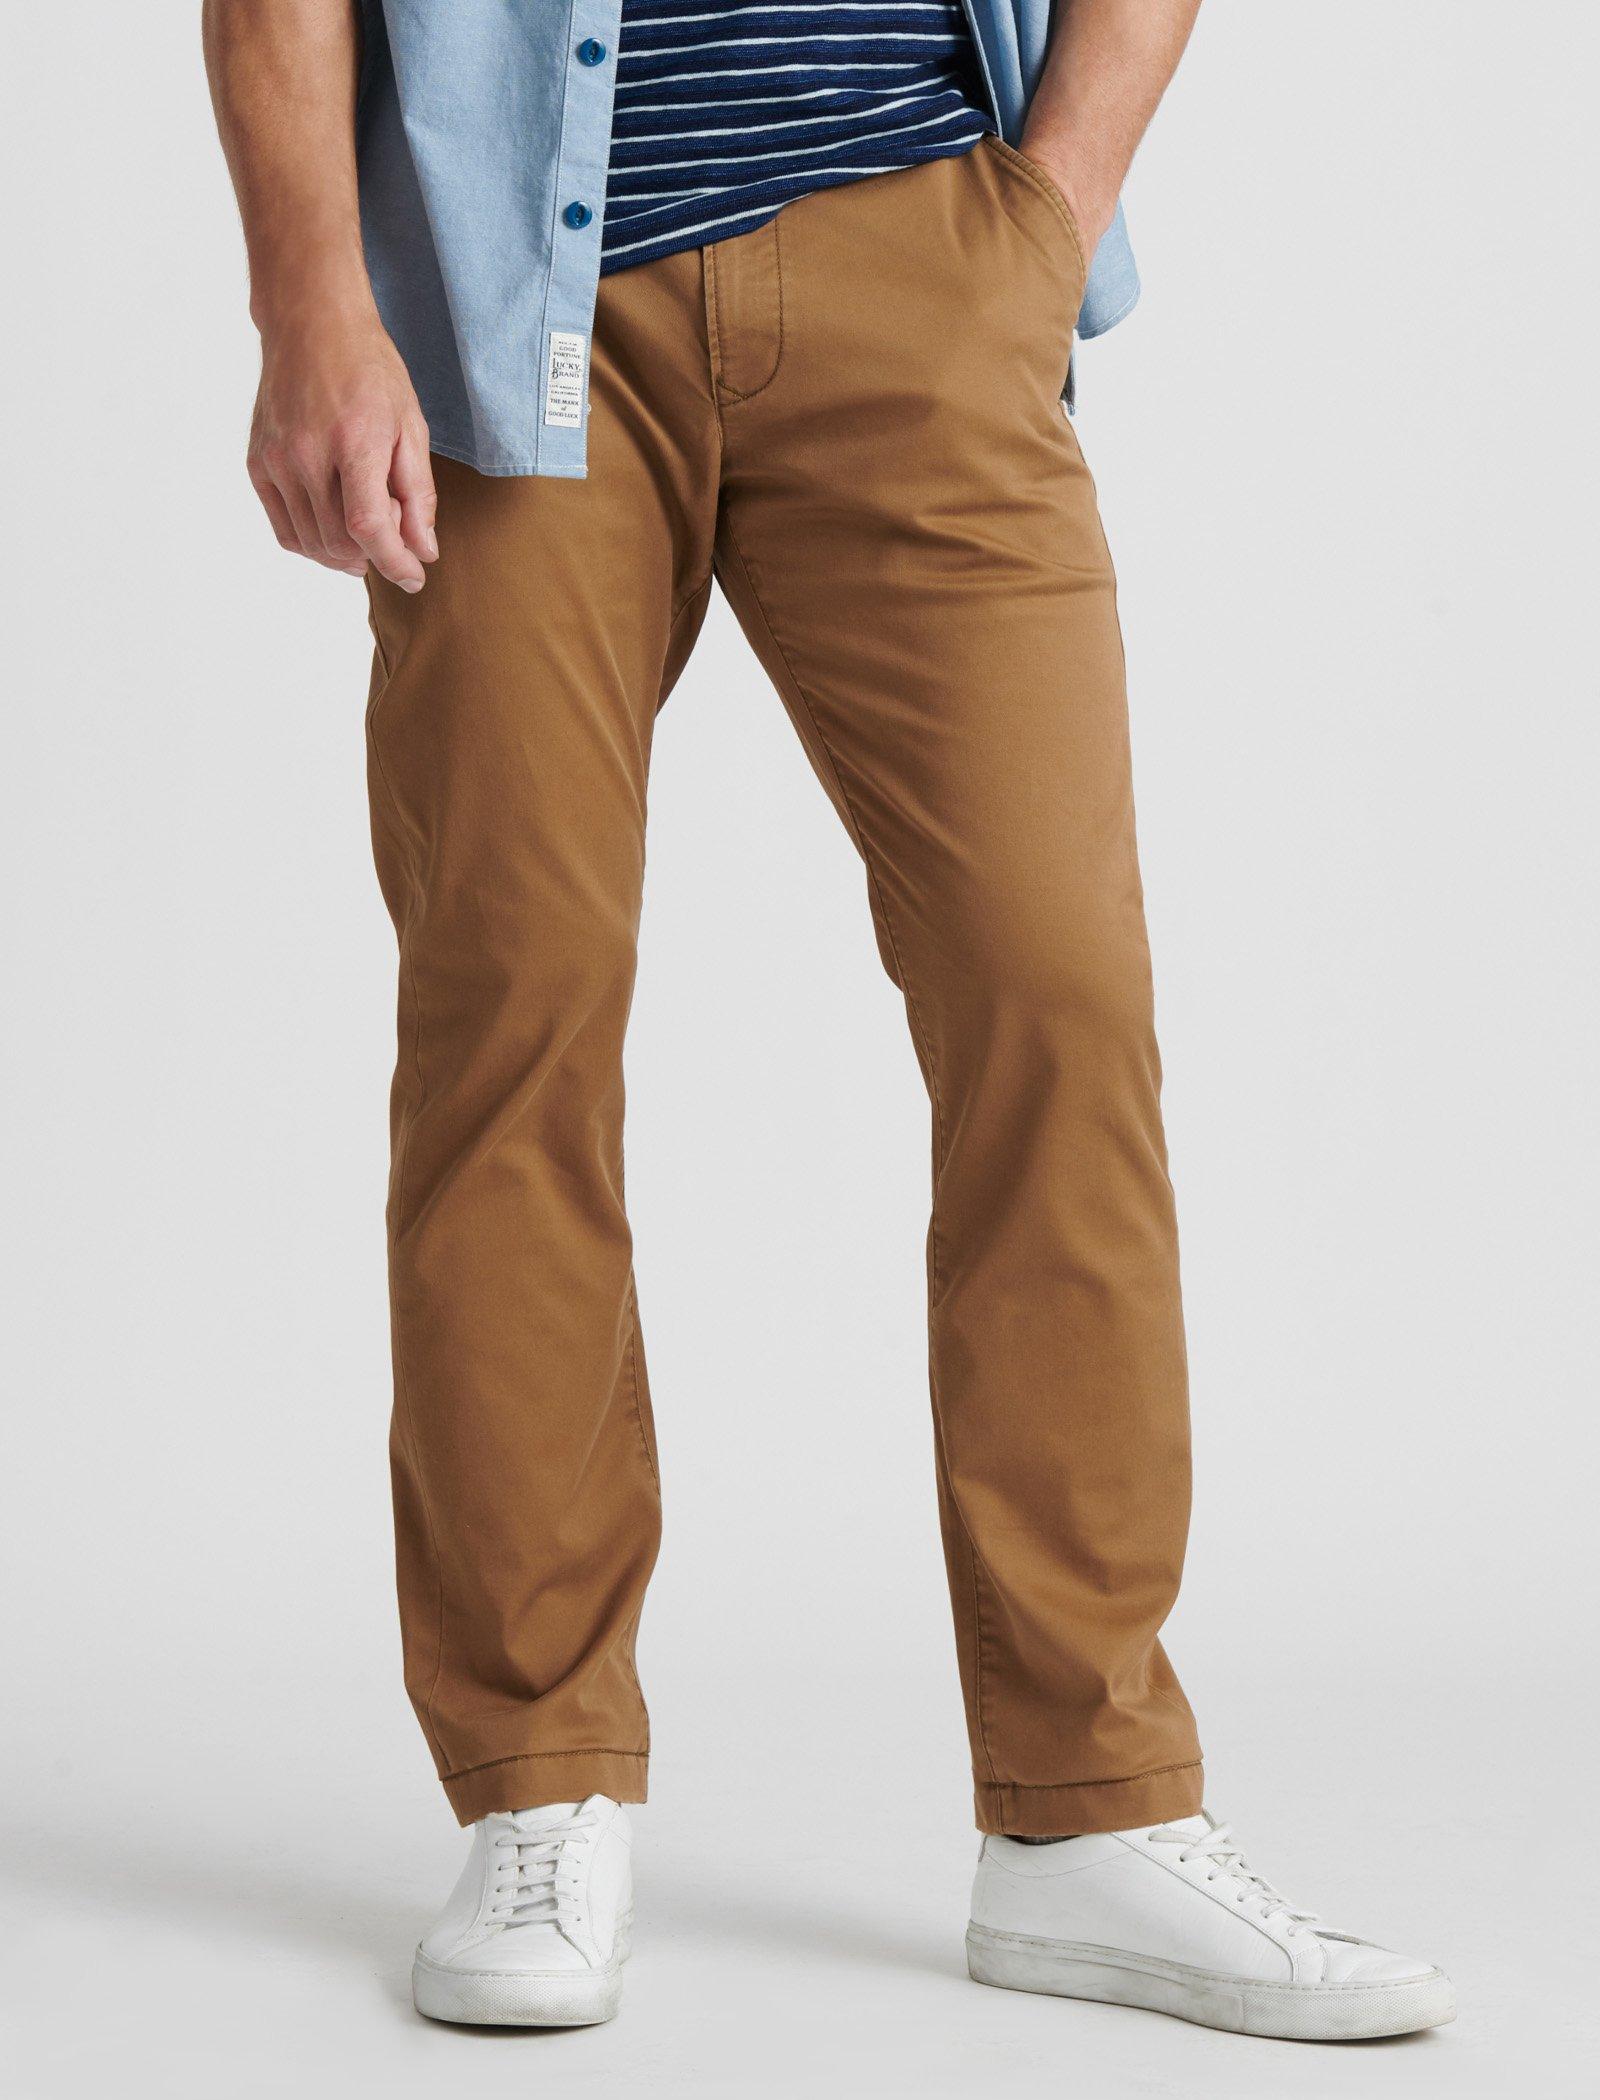 lucky brand men's khaki pants